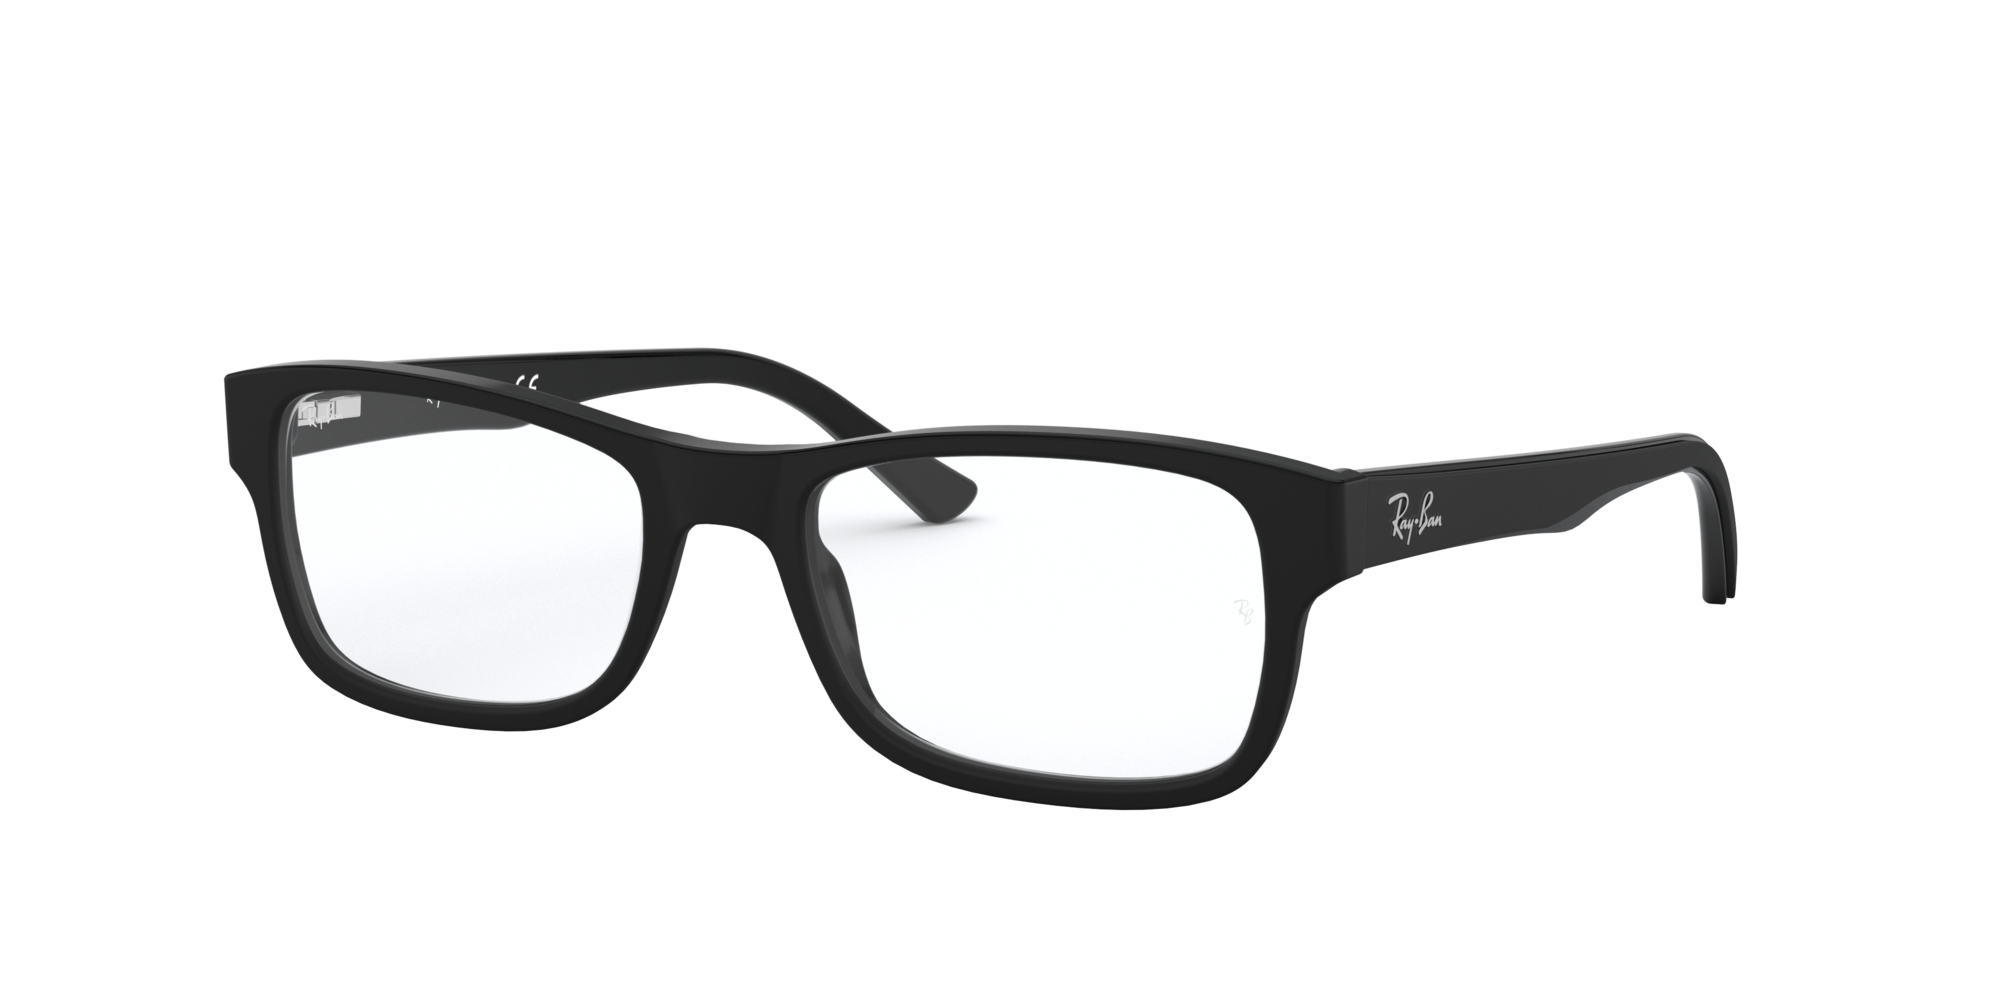 RX5268: Shop Ray-Ban Black Rectangle Eyeglasses at LensCrafters